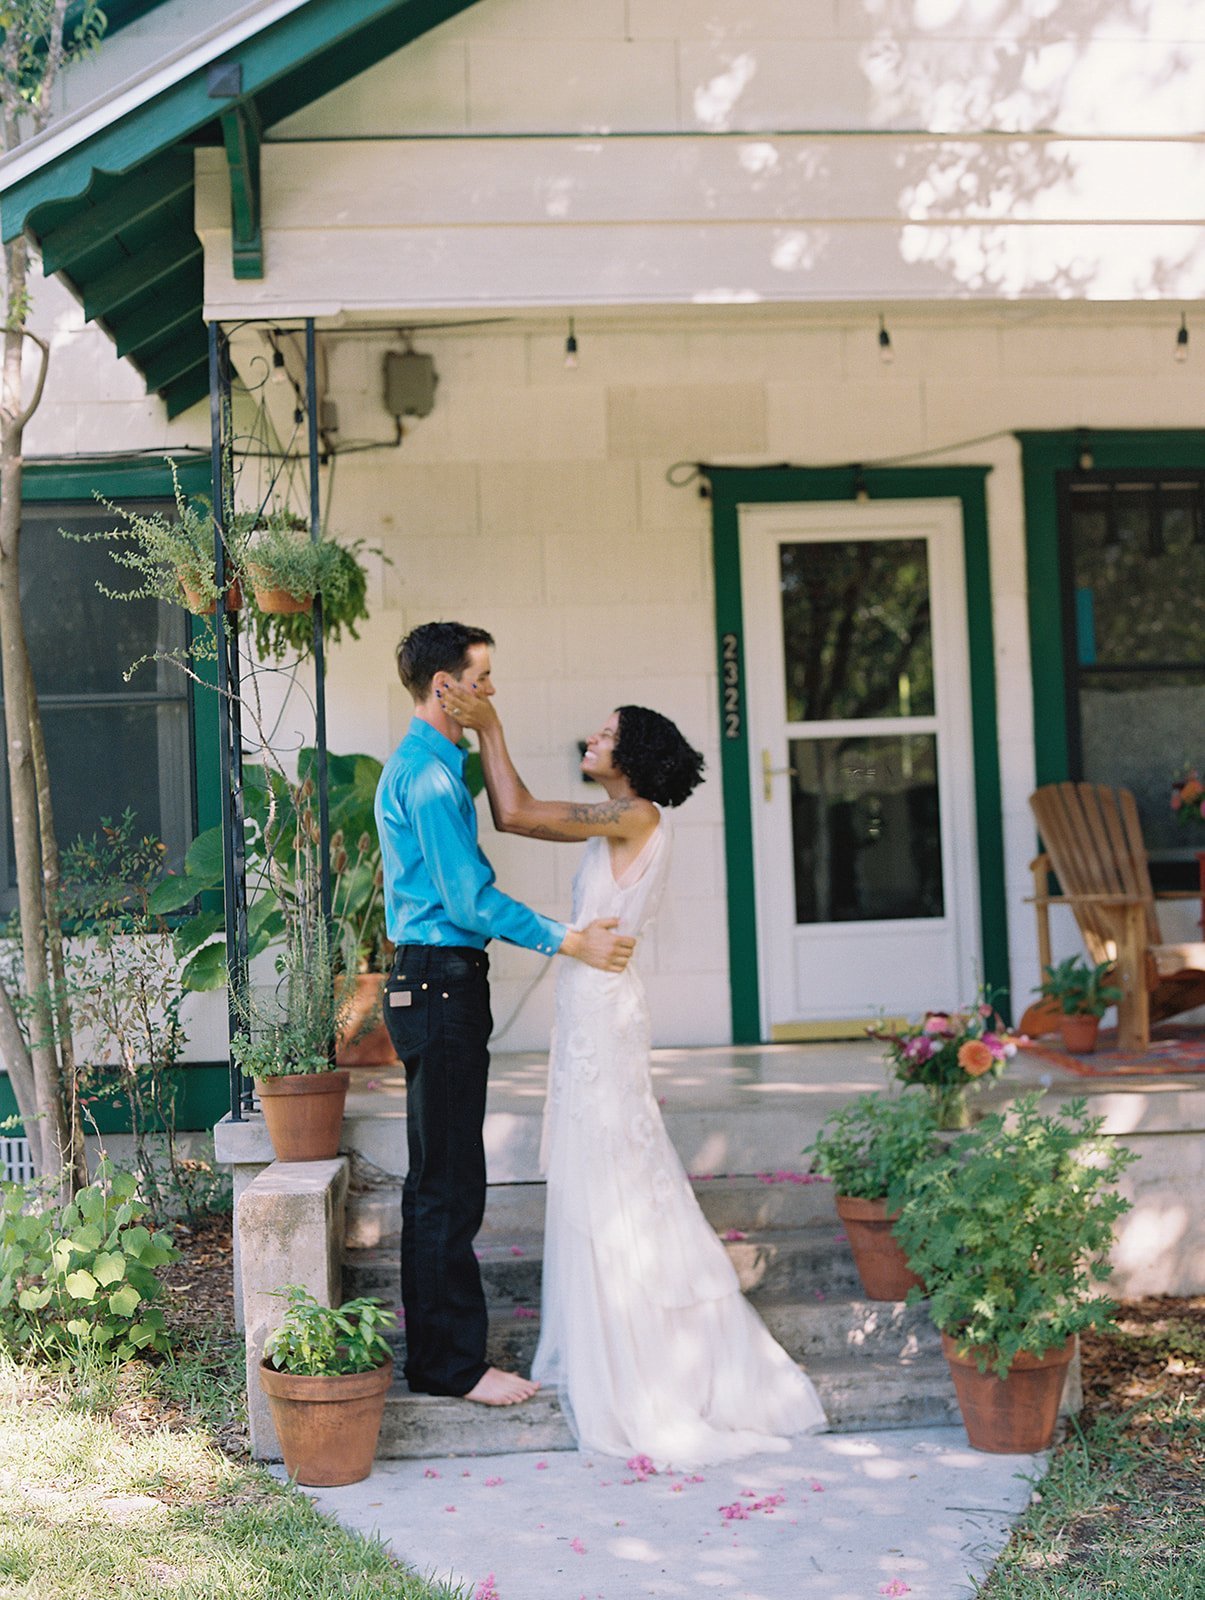 Best-Austin-Wedding-Photographers-Elopement-Film-35mm-Asheville-Santa-Barbara-18.jpg